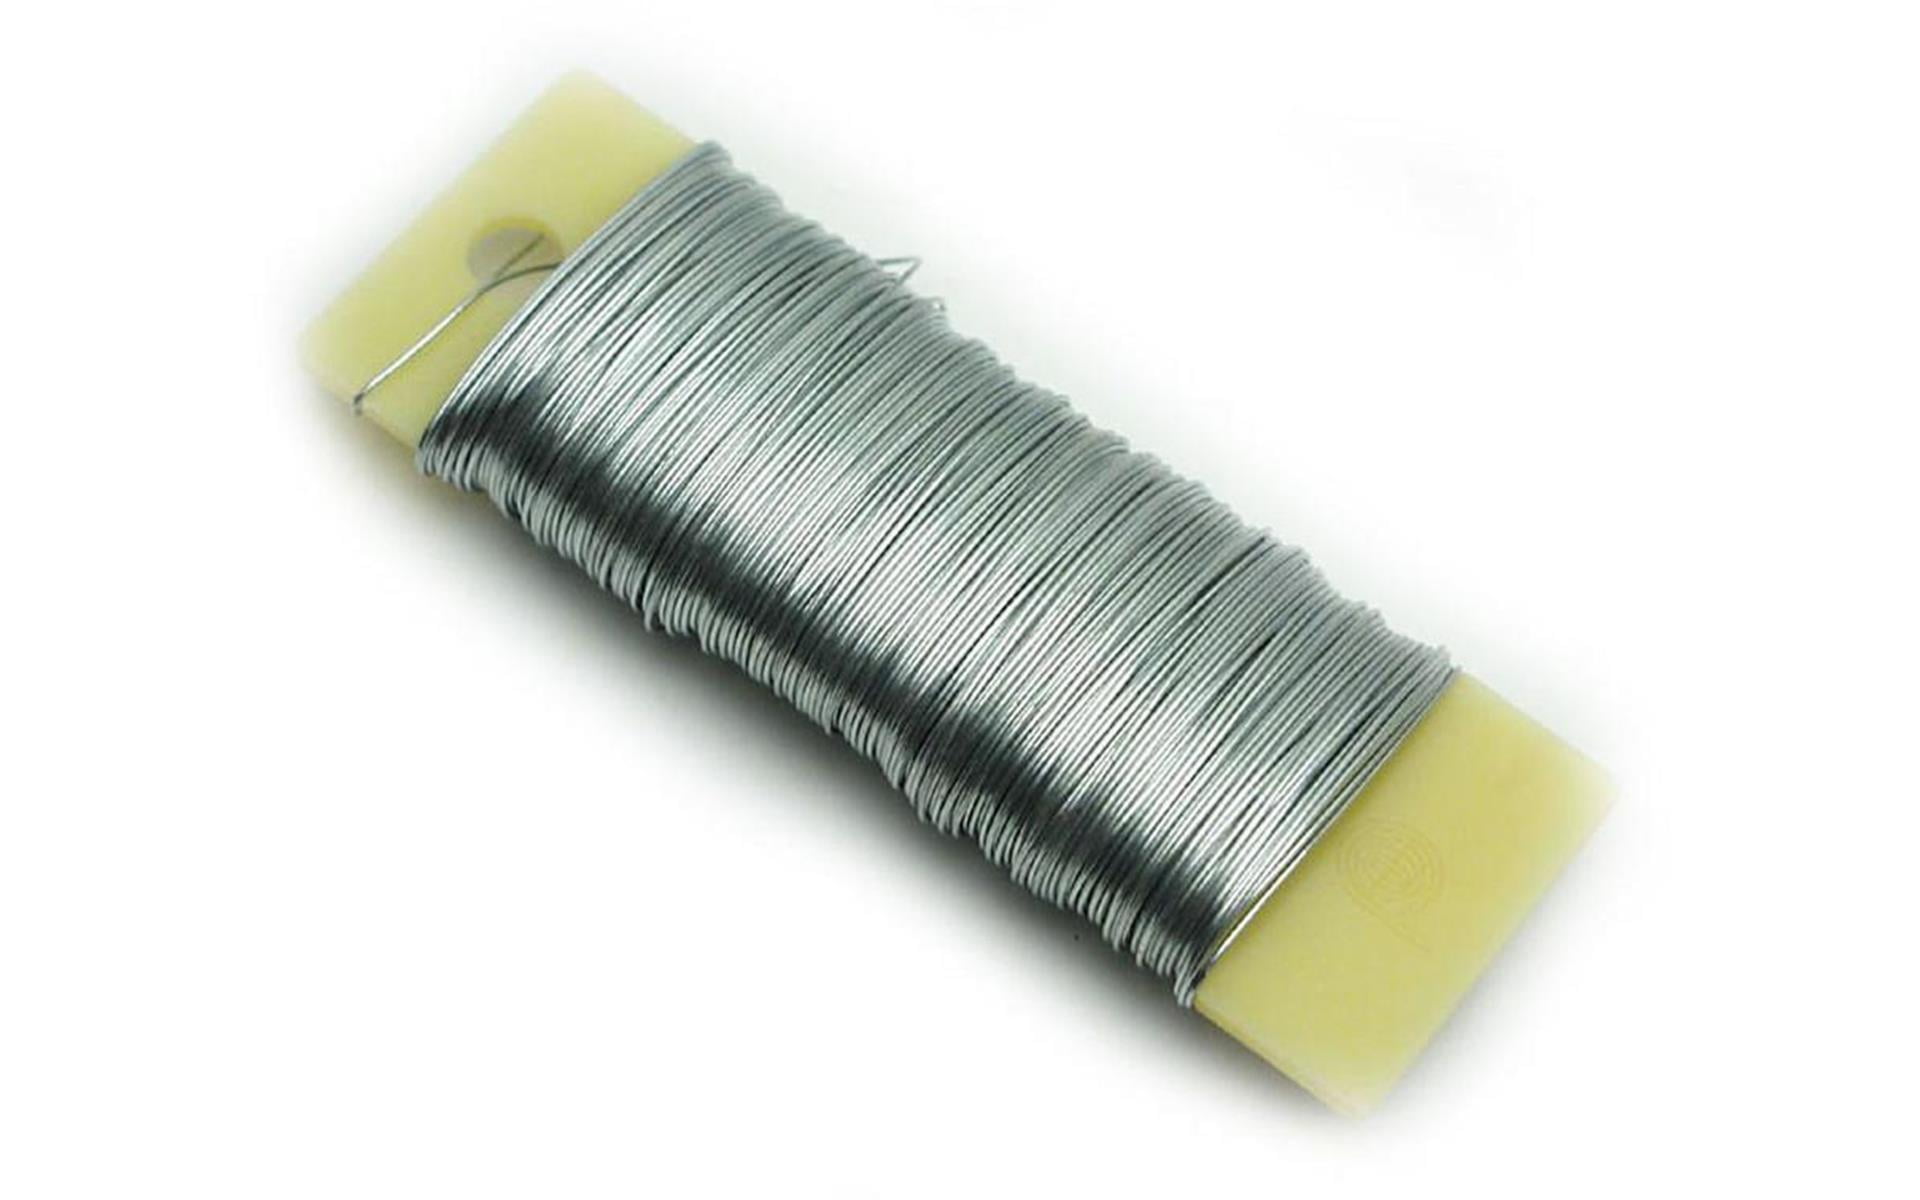 Panacea Greening Pins 1.75 50/Pkg-Silver 